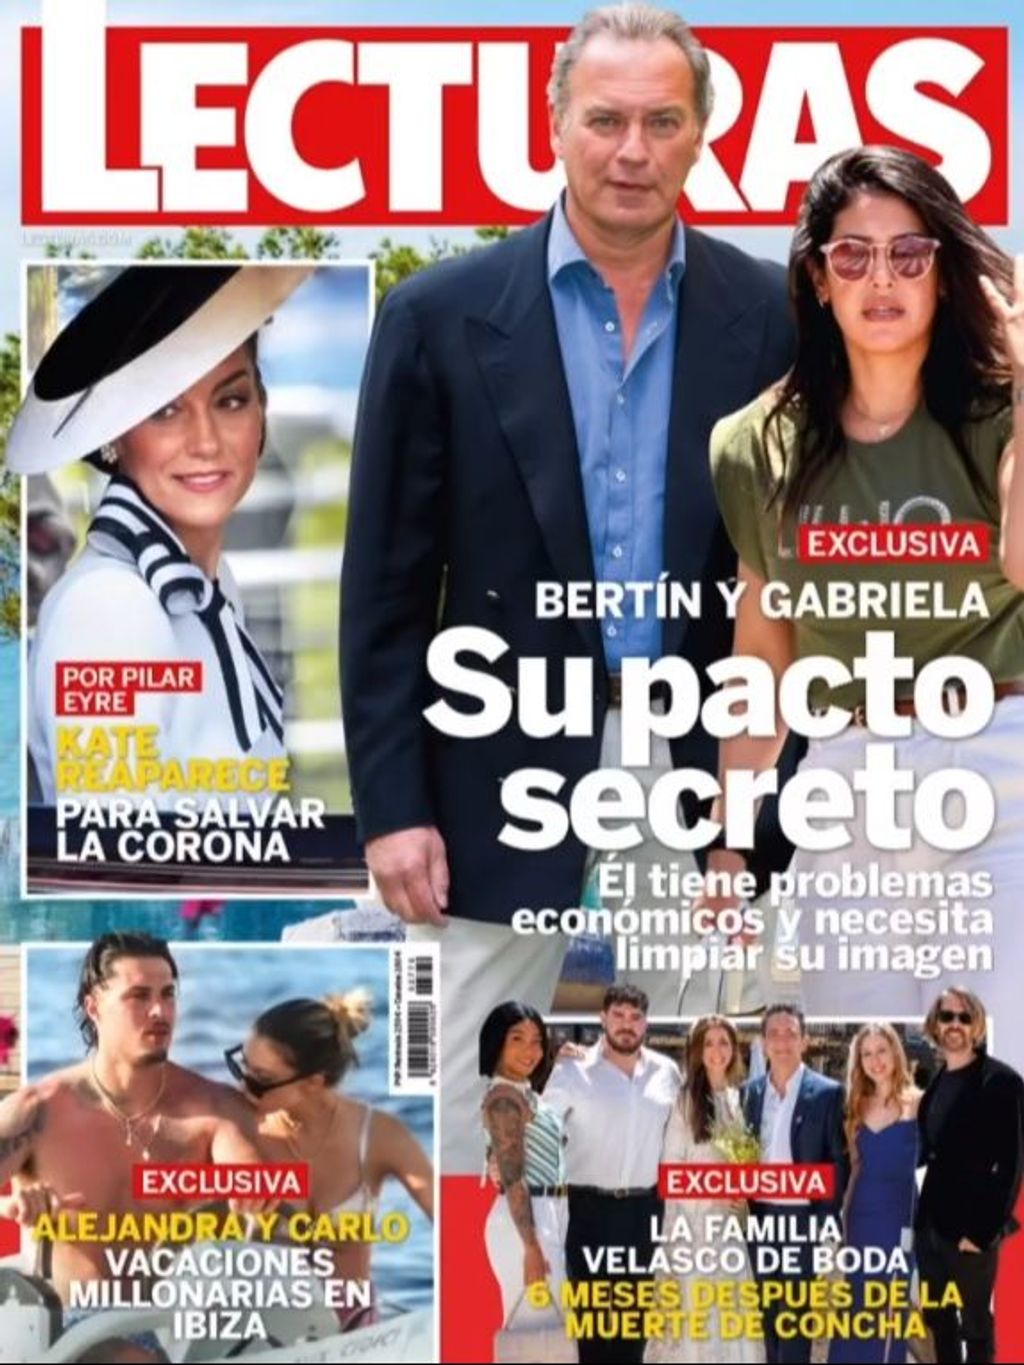 La portada de la revista Lecturas, con la boda de Carlota Velasco